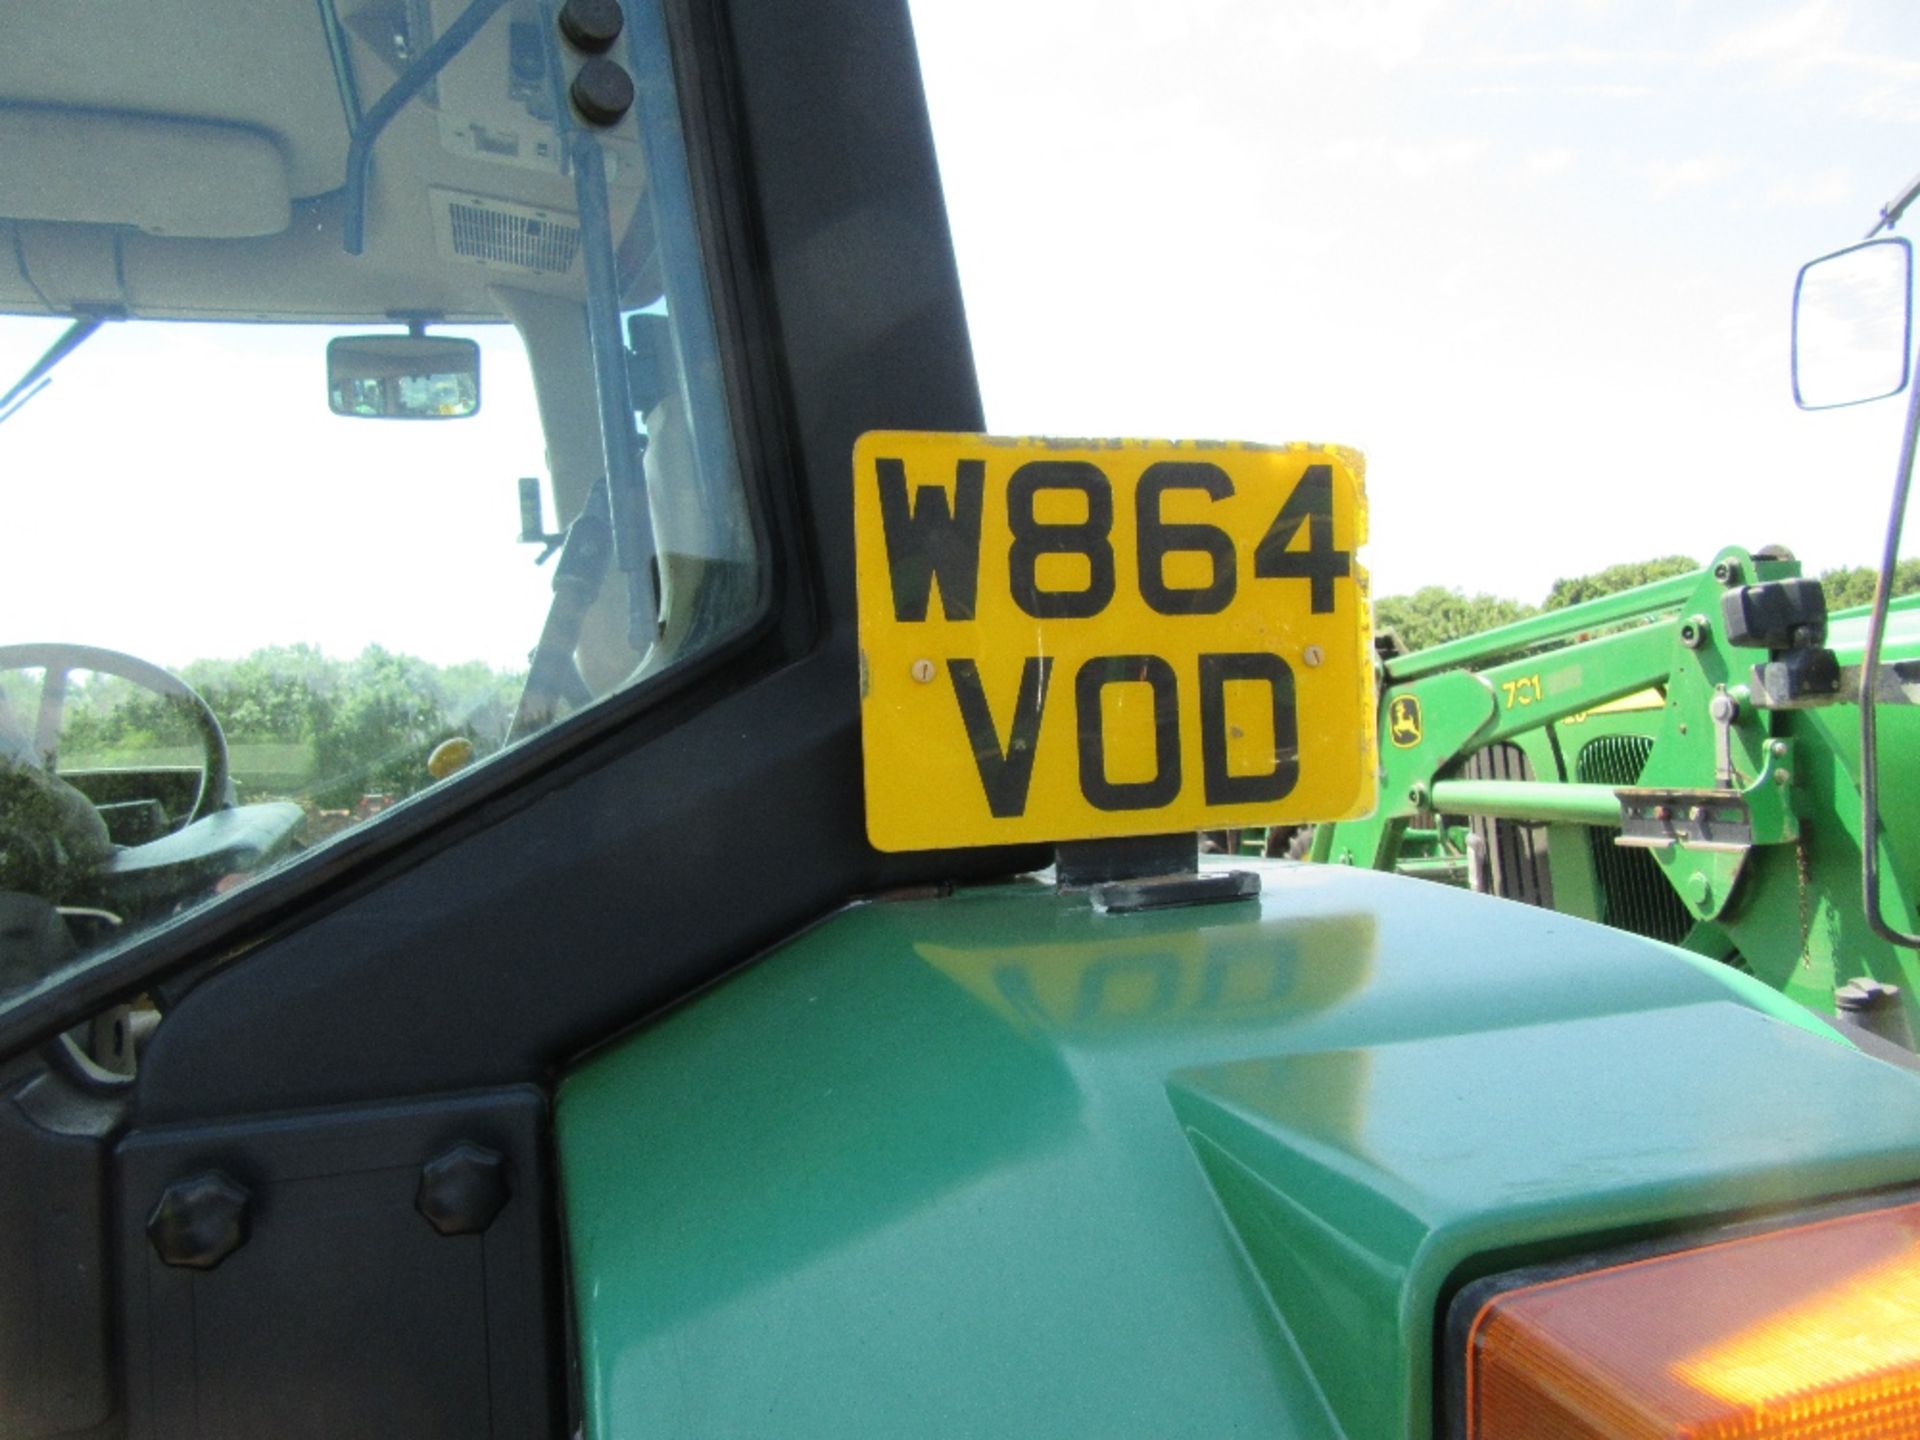 John Deere 6110 4wd Power Quad Tractor. No V5. Reg.No. W864 VOD Ser No 274226 - Image 7 of 15